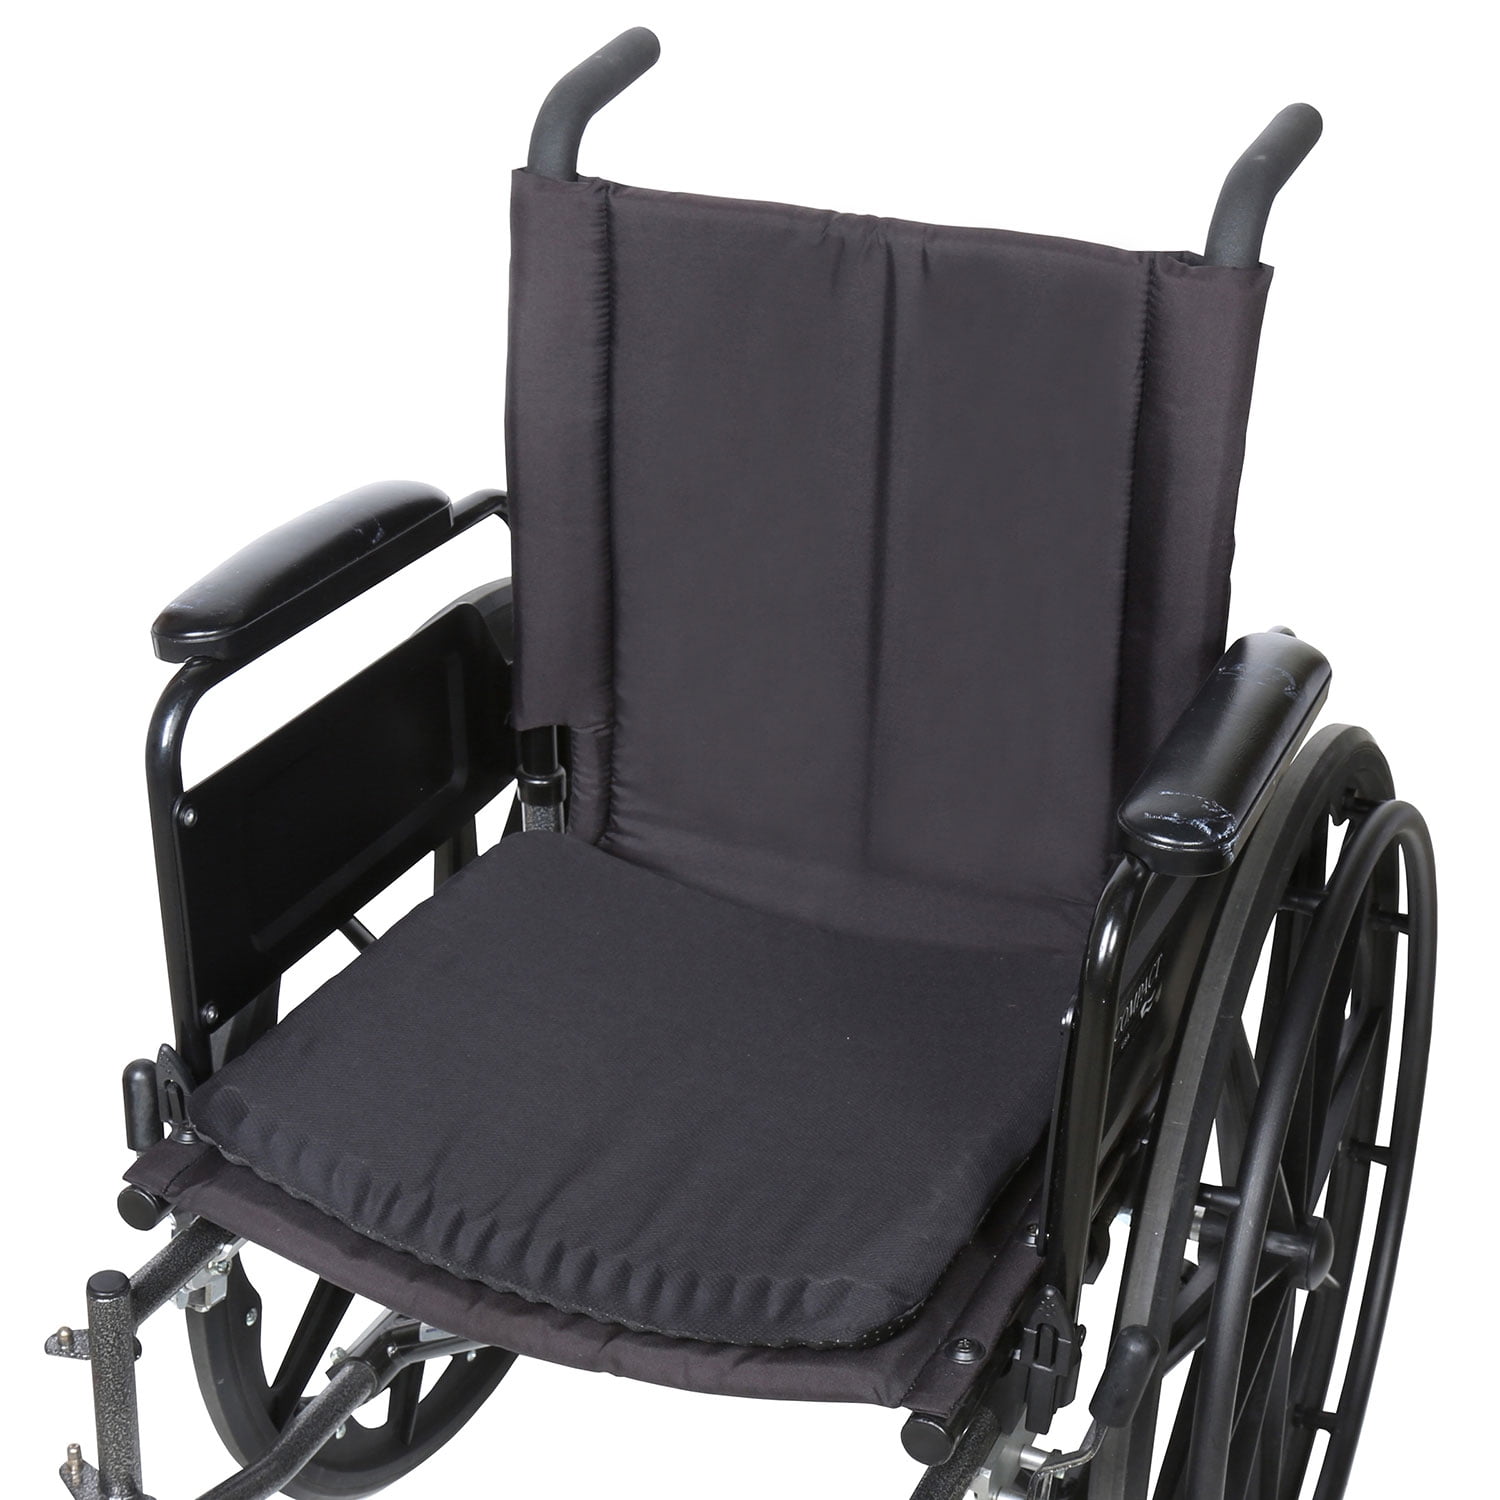 Kanglesdip Gel Seat Cushion for Long Sitting - Non Slip Orthopedics Gel Cushion for Tailbone Pain Relief - Office Chair Wheelchair Car Seat Cushion